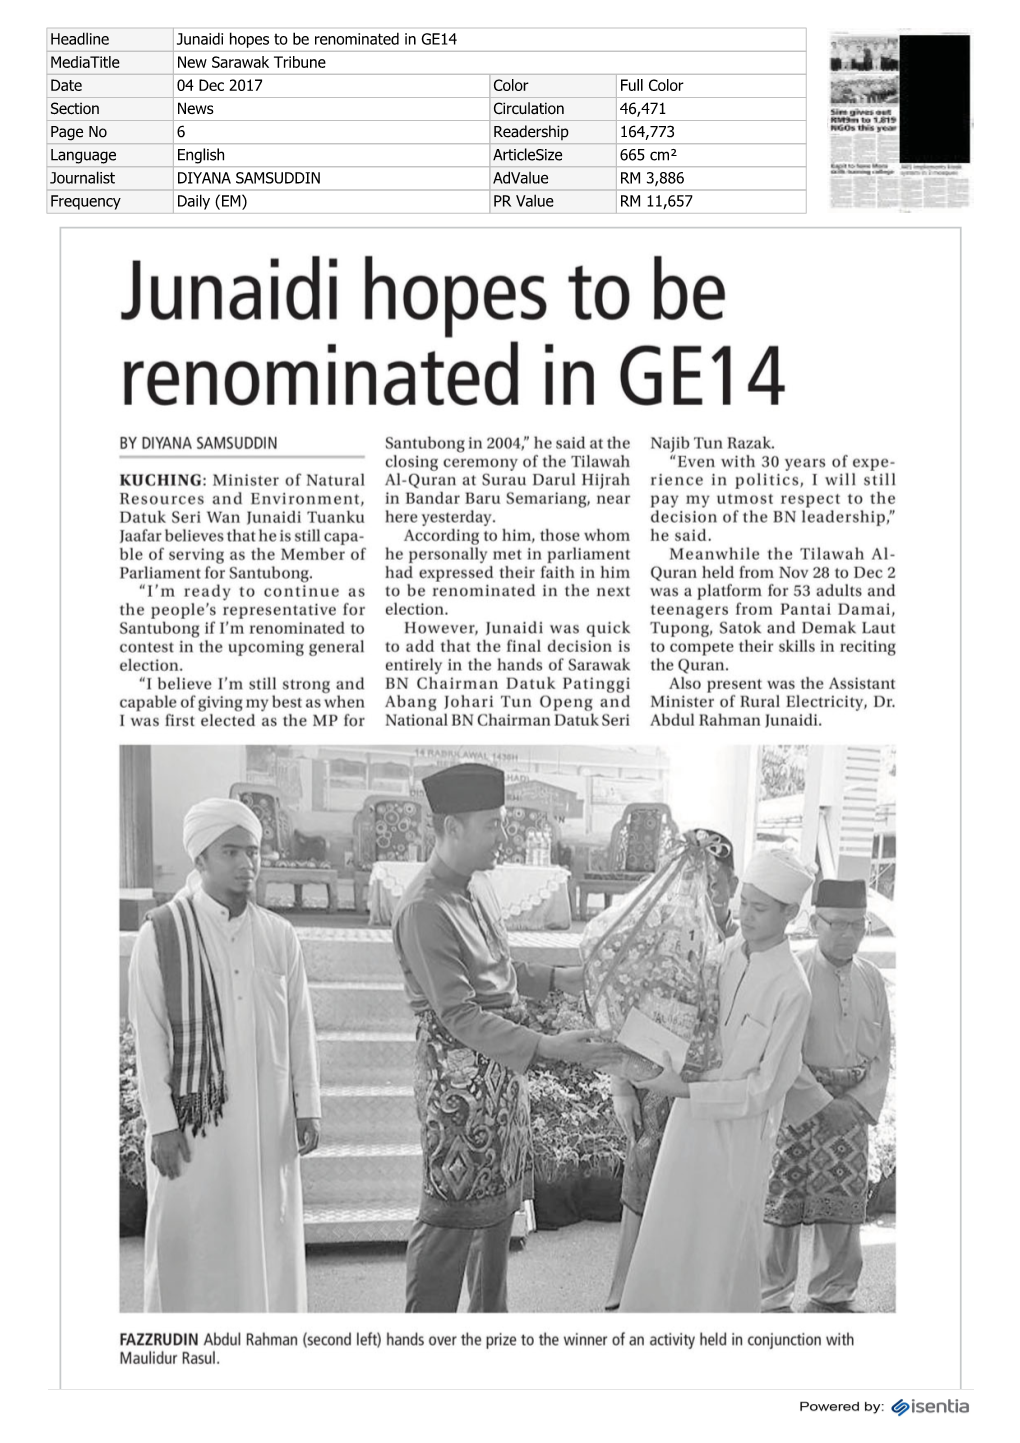 Junaidi Hopes to Be Renominated in Ge14